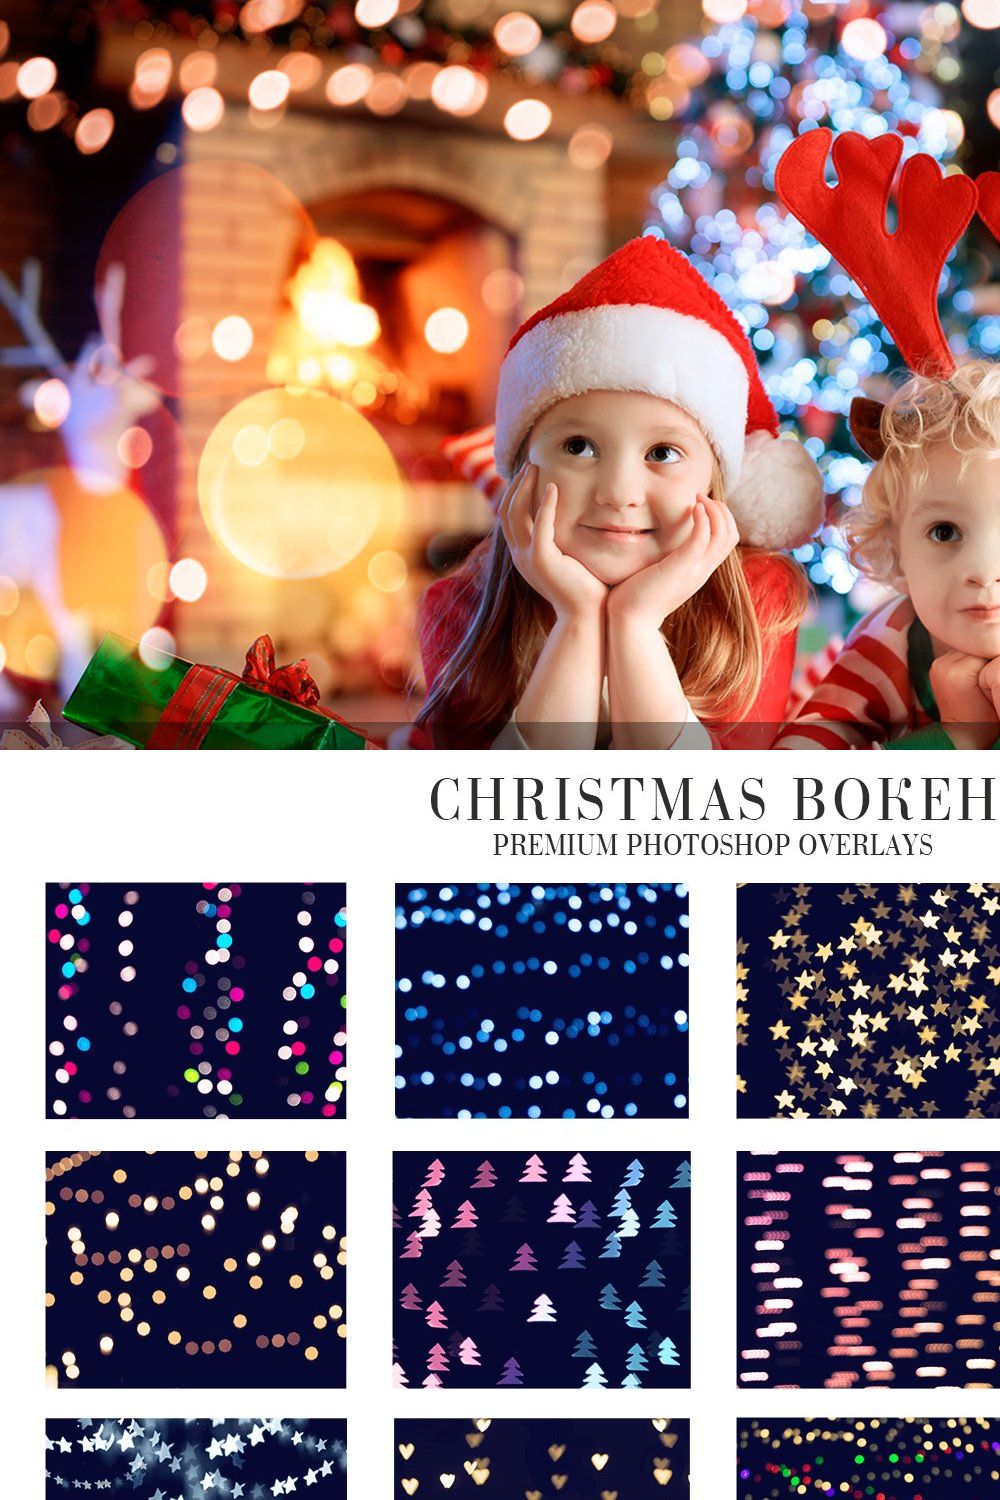 Photoshop Overlays - Christmas Bokeh pinterest preview image.